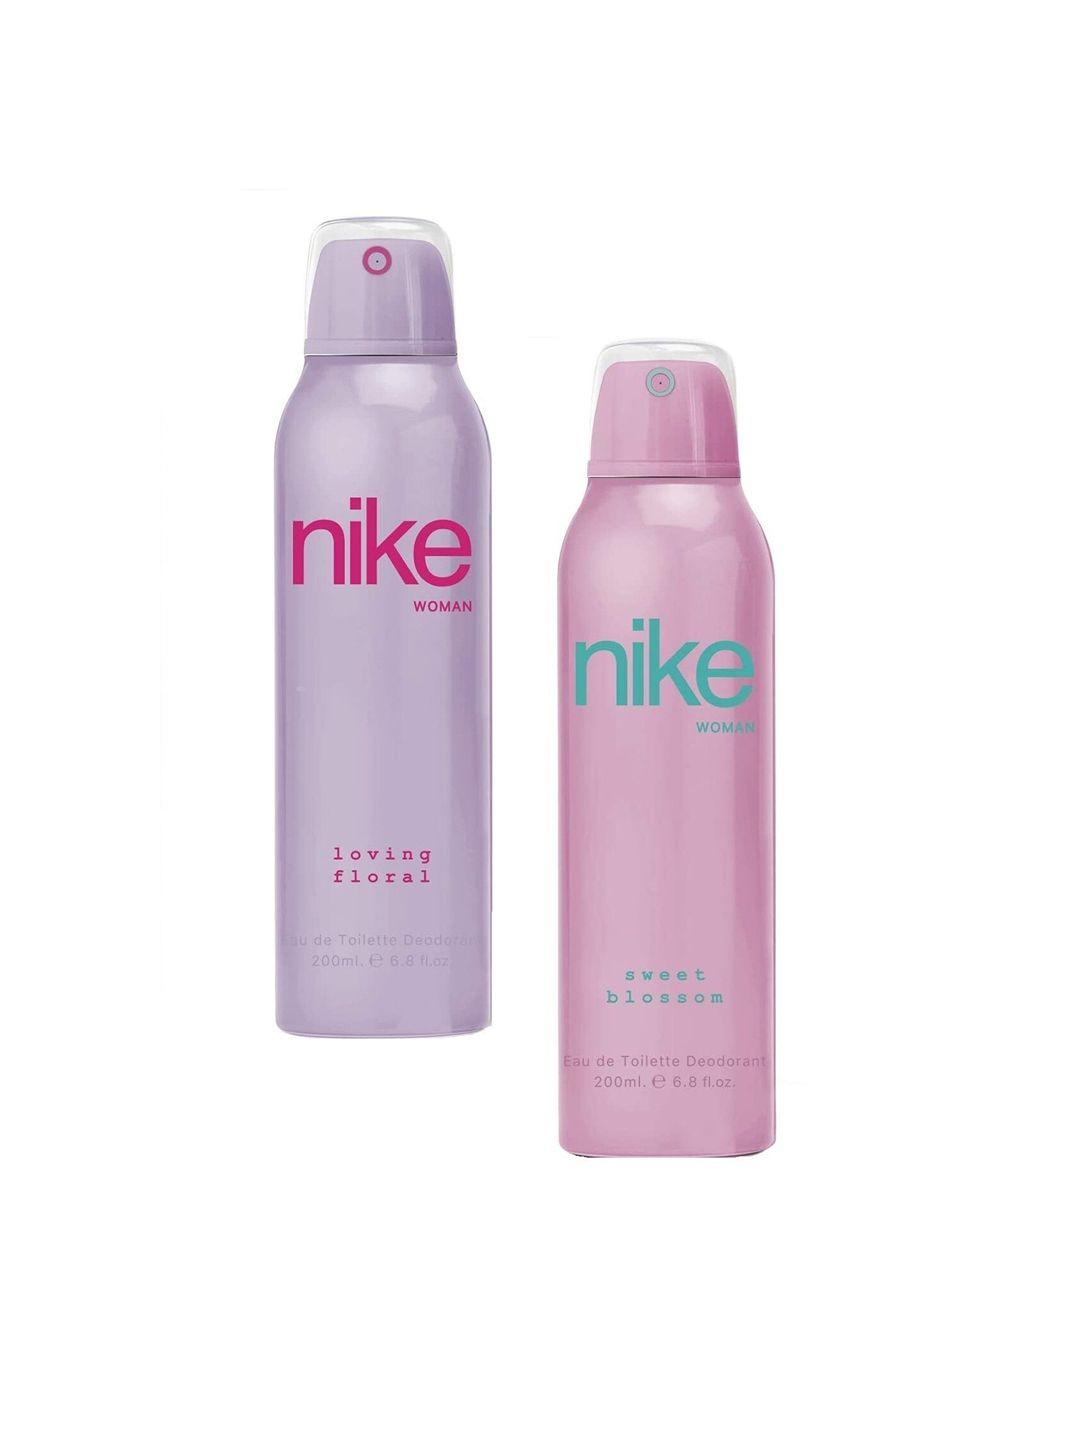 nike pack of 2 woman loving floral & sweet blossom deodorant- 200ml each